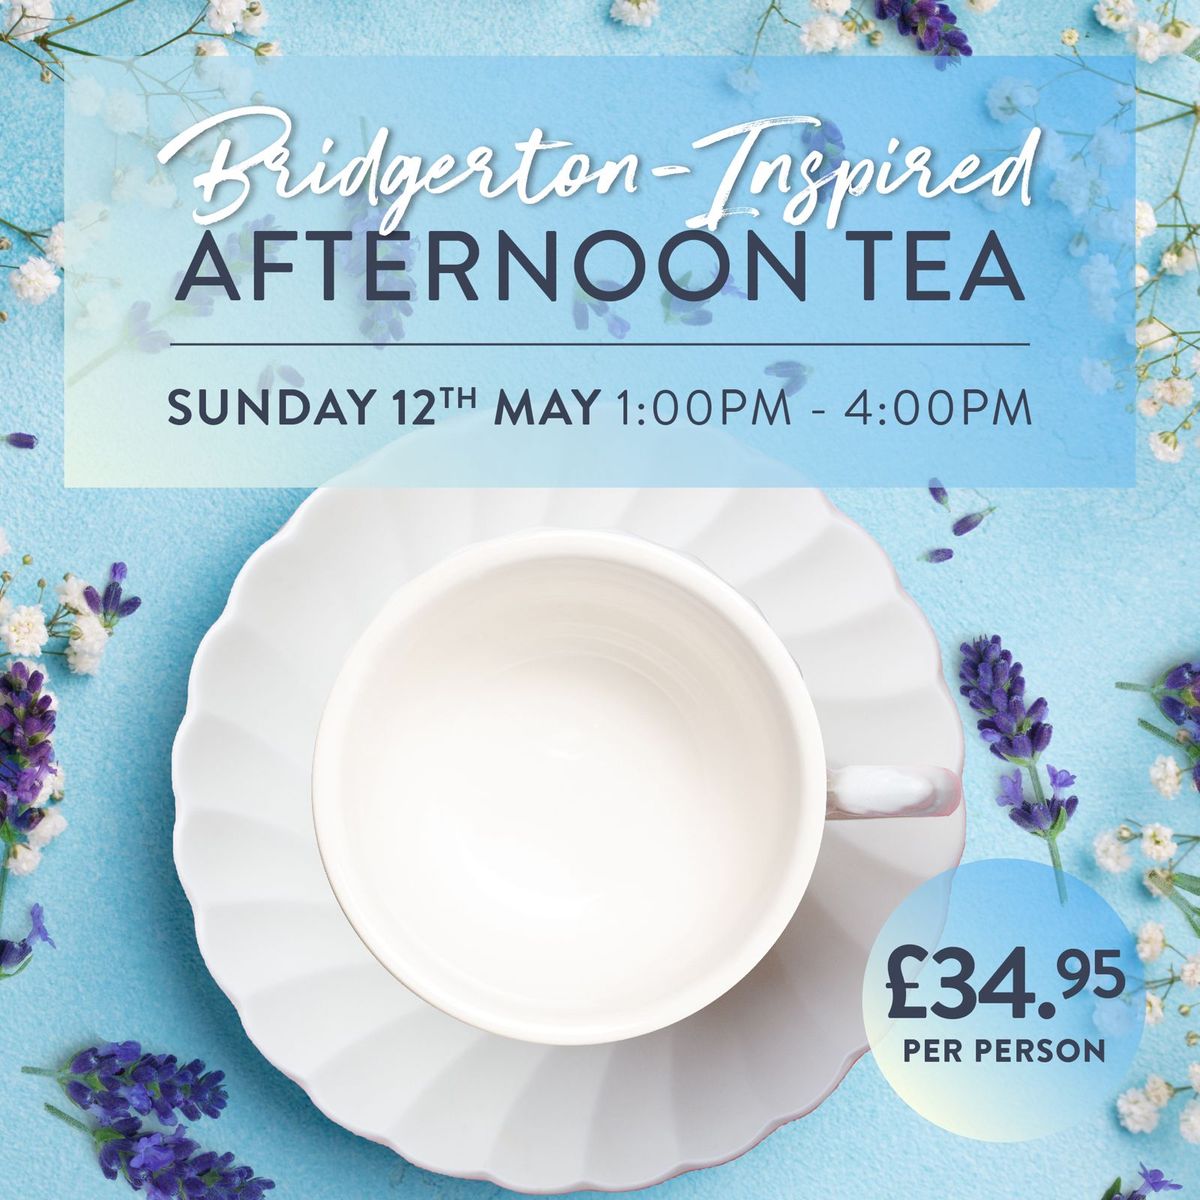 Bridgerton Inspired Afternoon Tea 